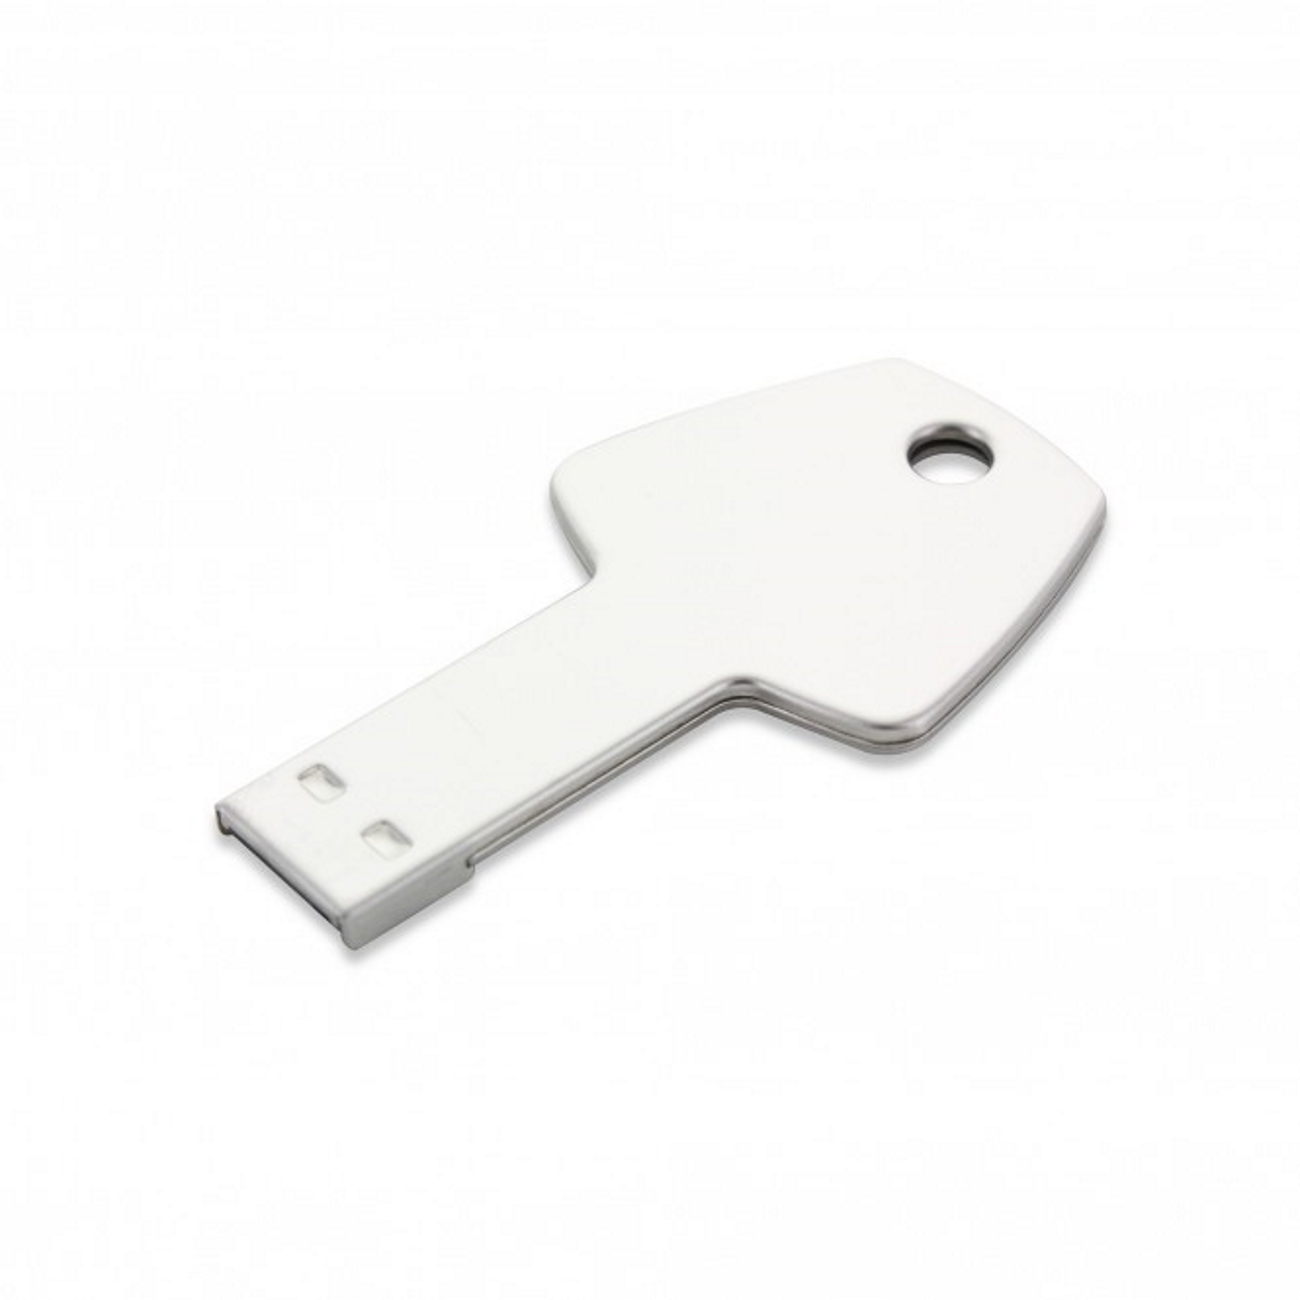 Key USB GERMANY ®Schlüssel GB) 64 (Silber, USB-Stick